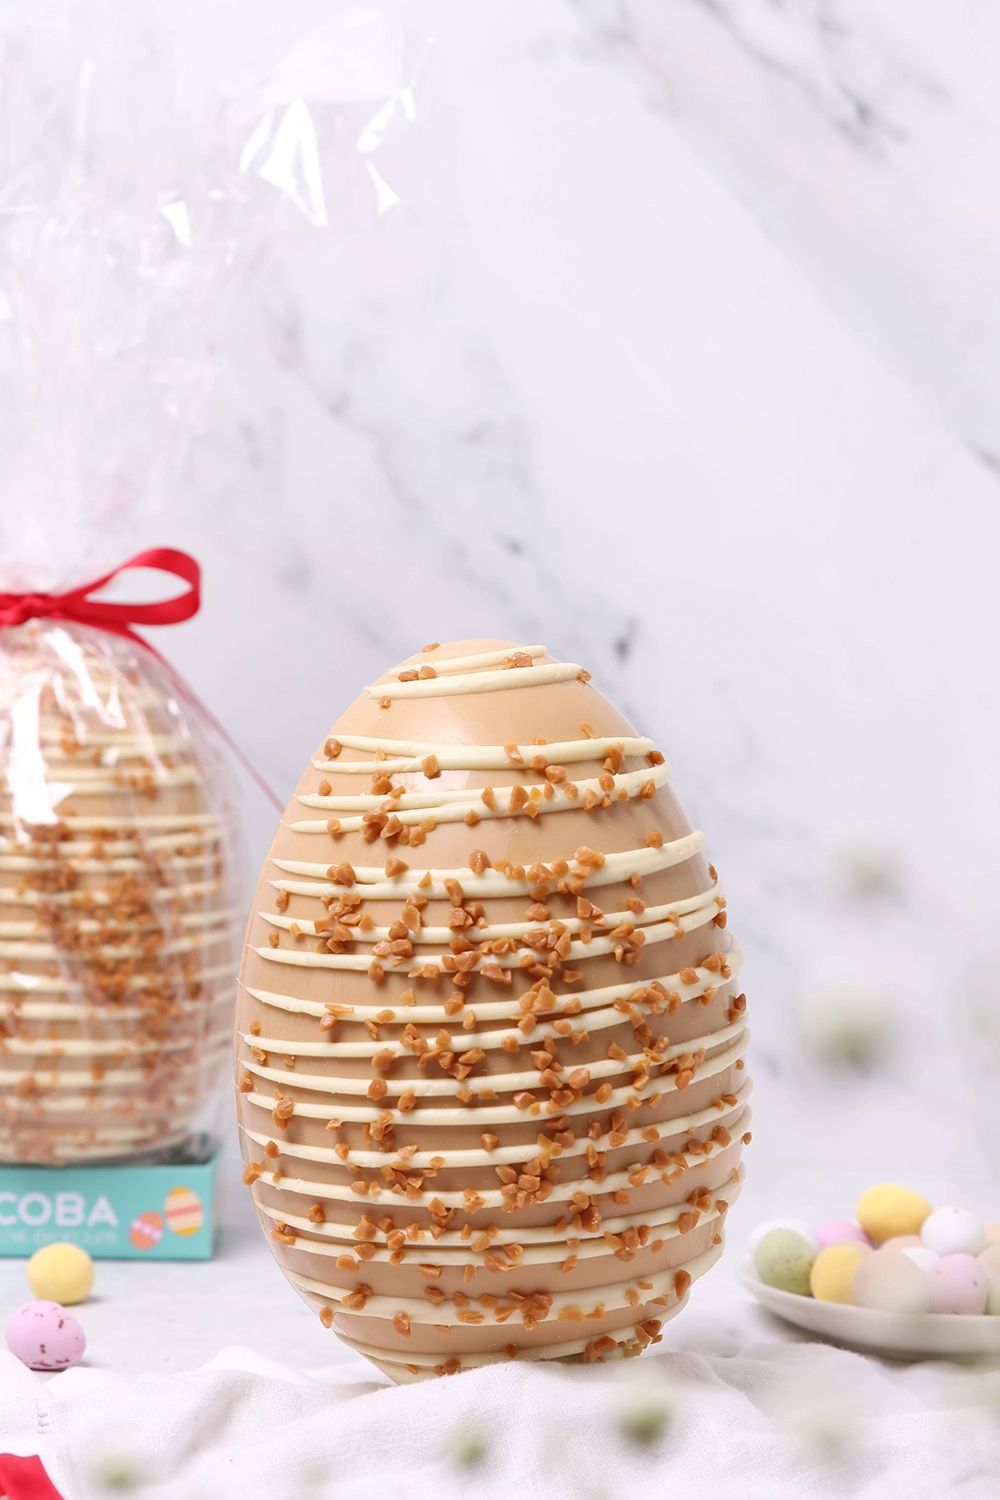 Golden Chocolate Easter Egg with Caramel Shards